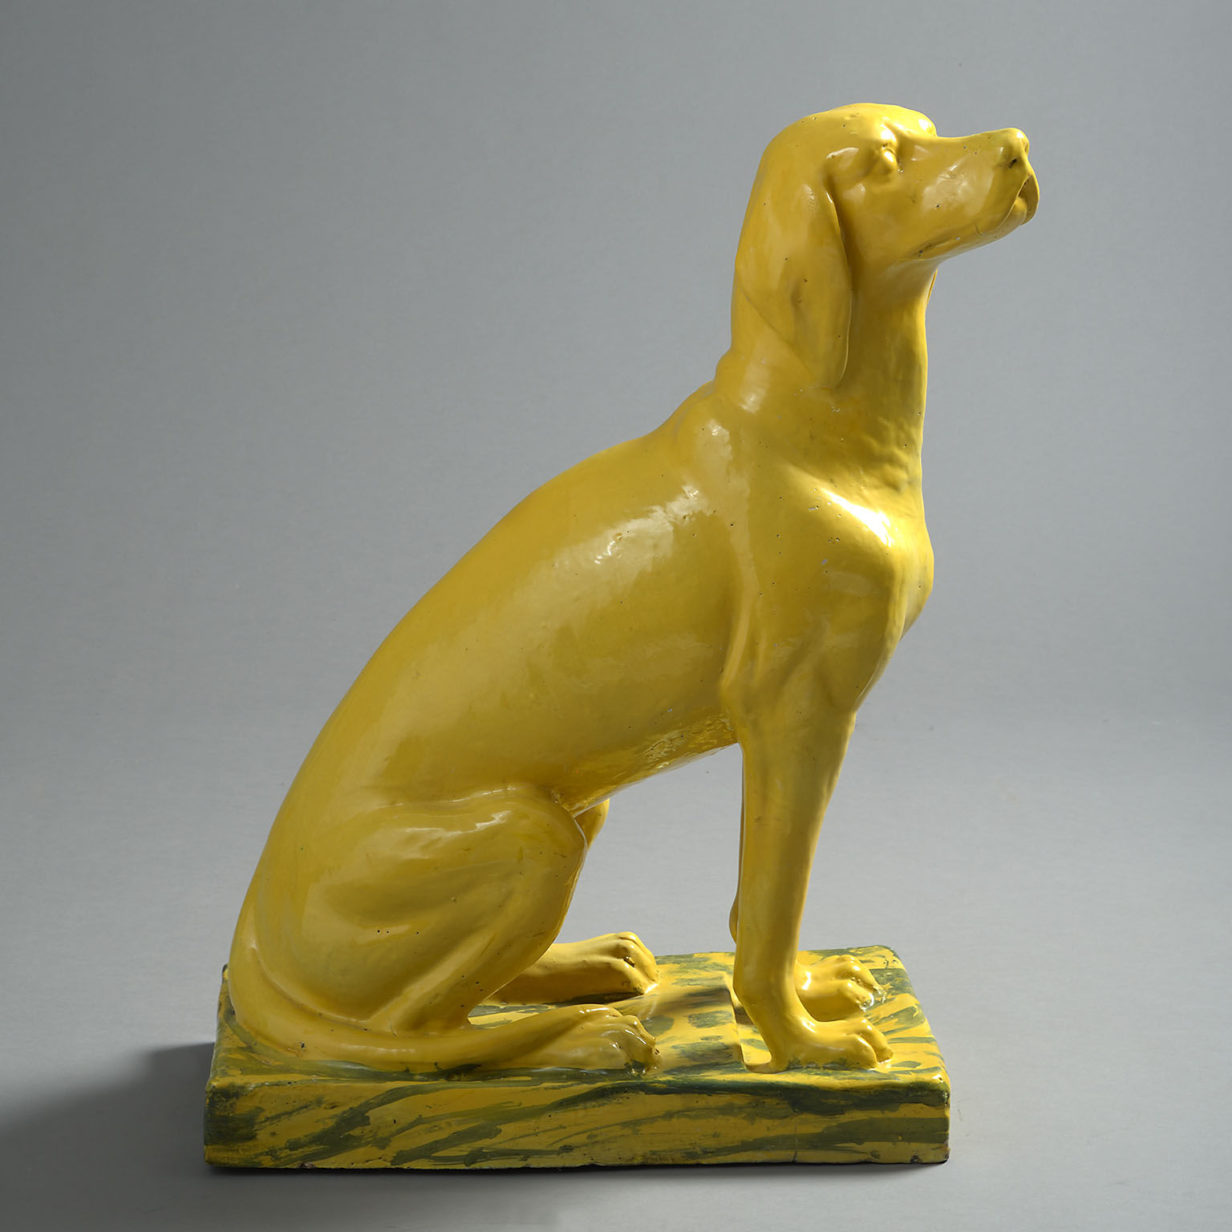 Lifesize bright yellow ceramic statue of a pointer dog